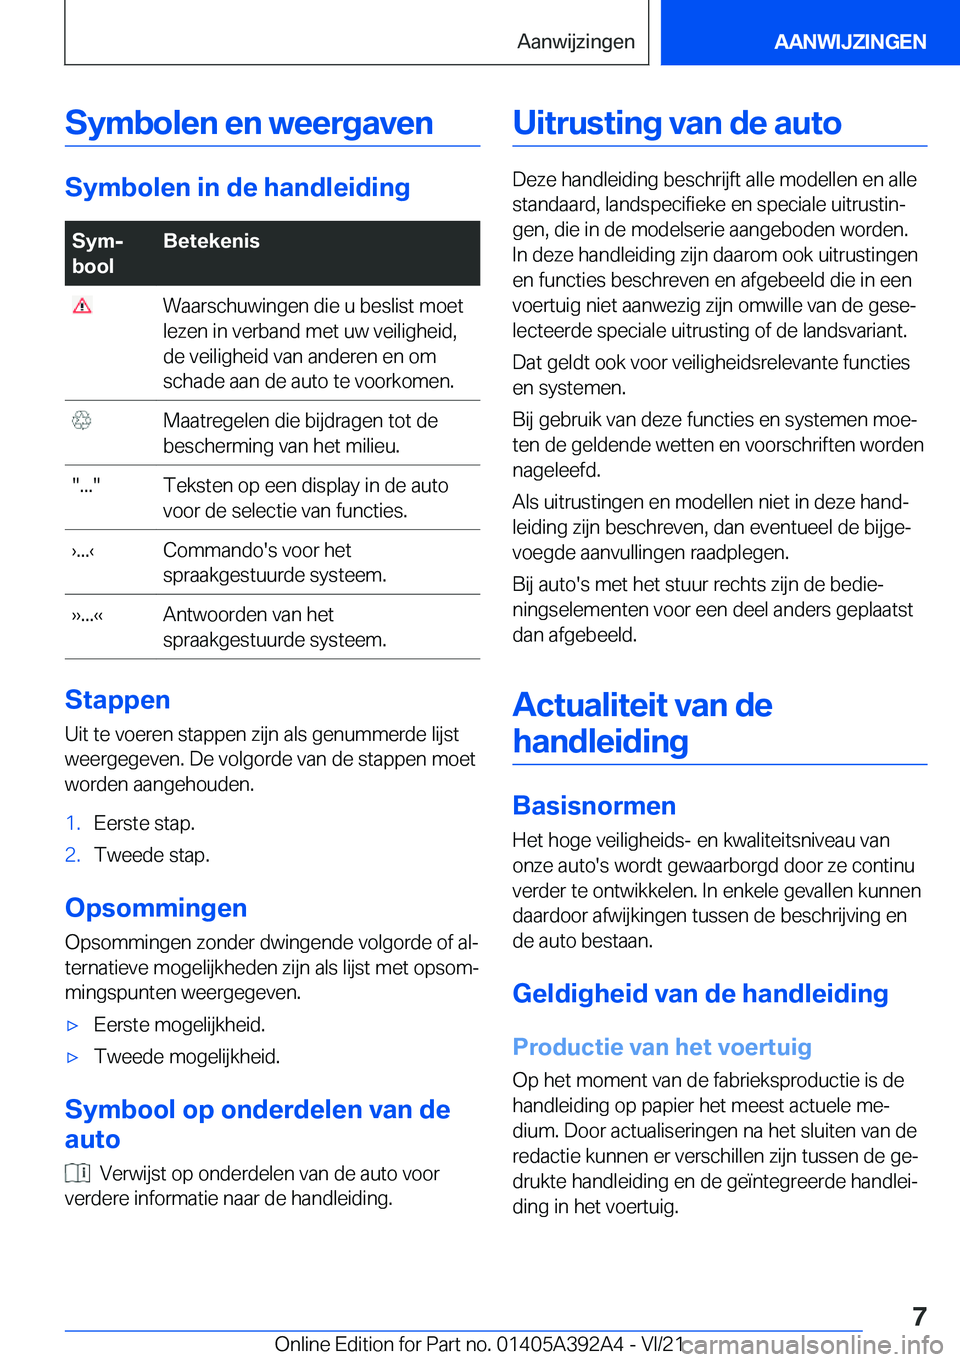 BMW 4 SERIES 2022  Instructieboekjes (in Dutch) �S�y�m�b�o�l�e�n��e�n��w�e�e�r�g�a�v�e�n
�S�y�m�b�o�l�e�n��i�n��d�e��h�a�n�d�l�e�i�d�i�n�g
�S�y�mj
�b�o�o�l�B�e�t�e�k�e�n�i�s��W�a�a�r�s�c�h�u�w�i�n�g�e�n��d�i�e��u��b�e�s�l�i�s�t��m�o�e�t
